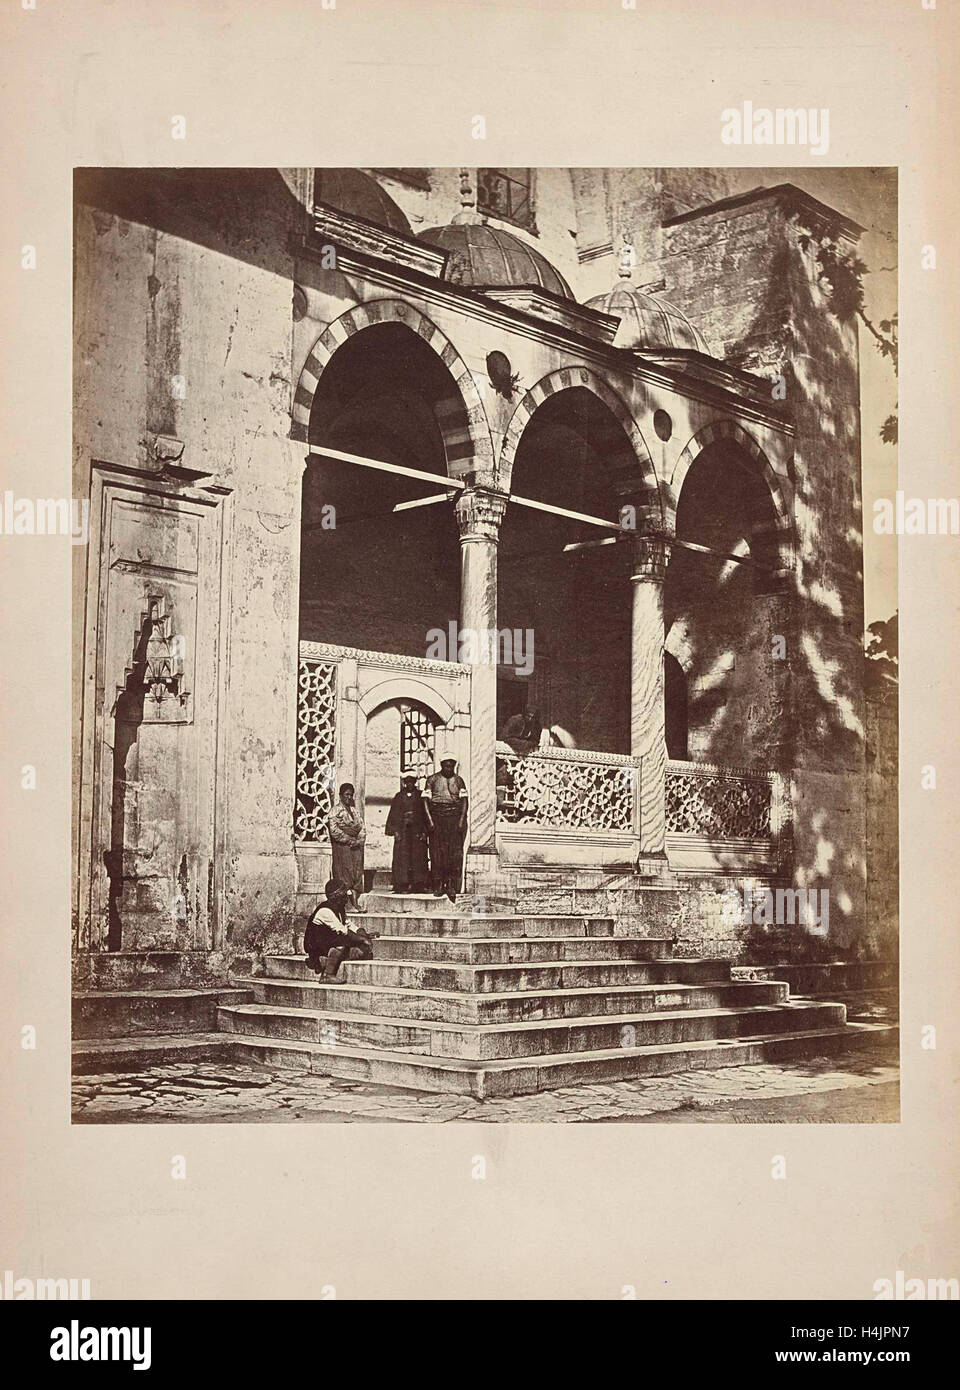 Portikus van de Süleymaniye-Moskee in Istanbul (Constantinopel). James Robertson, Felice Beato, 1854 Stockfoto